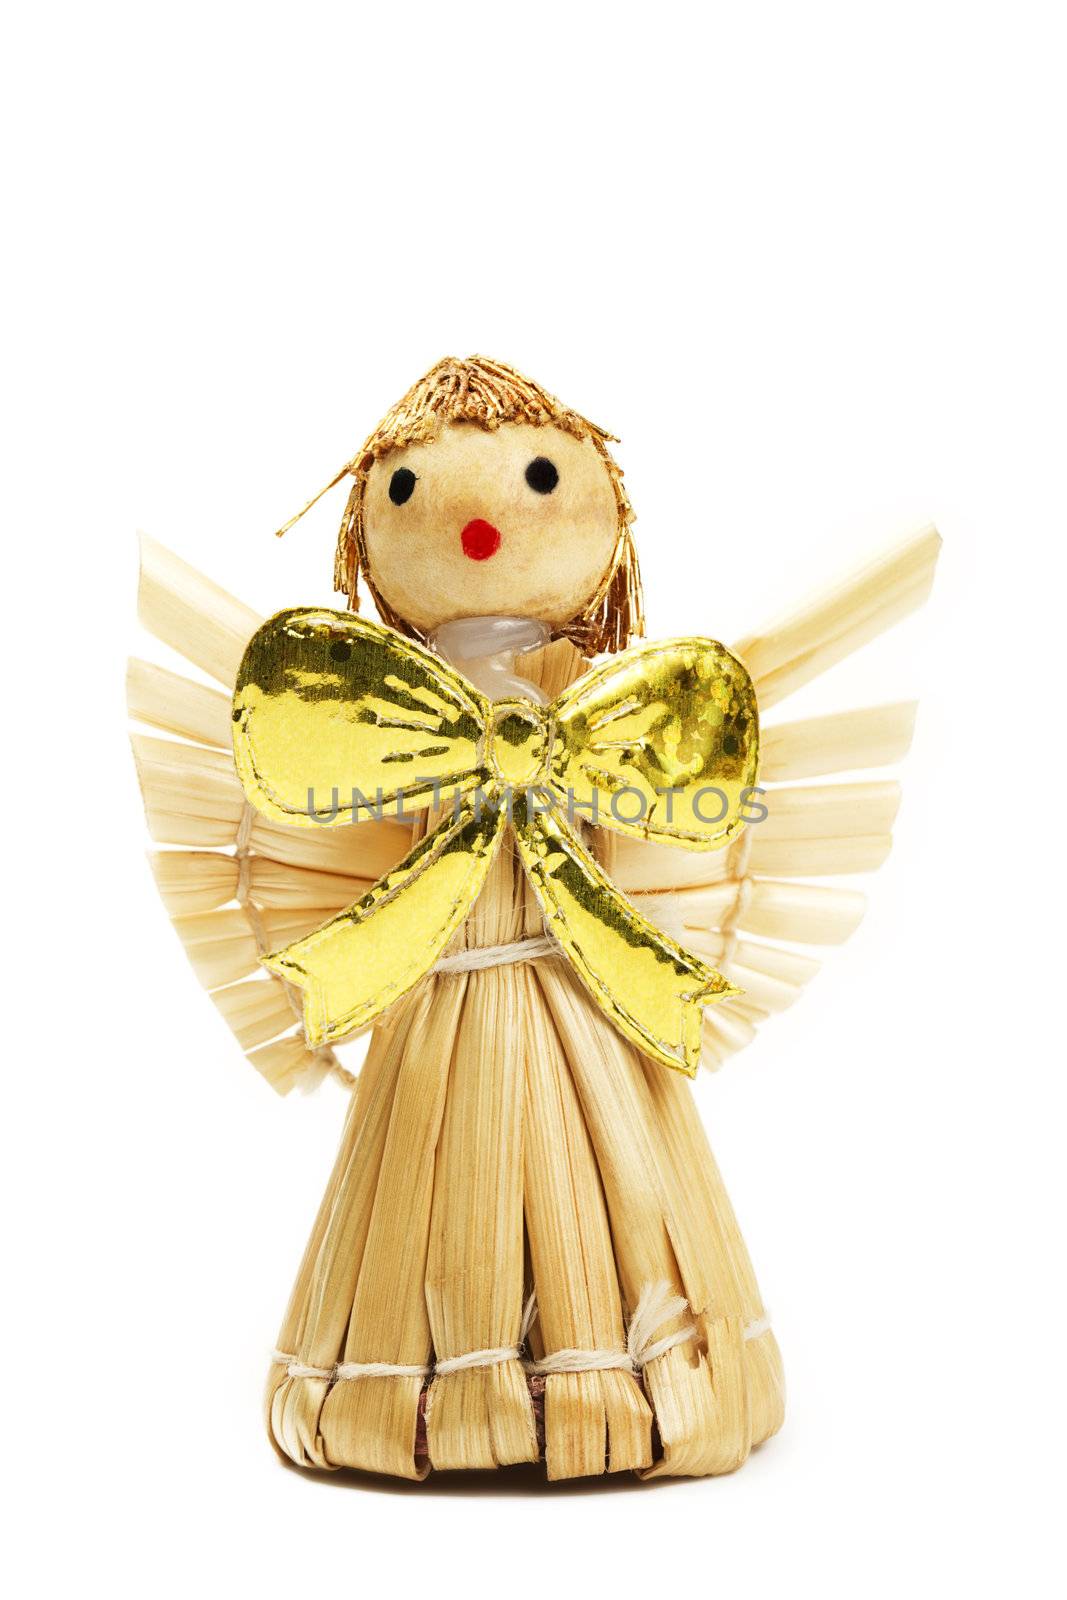 straw christmas angel figurine on white background